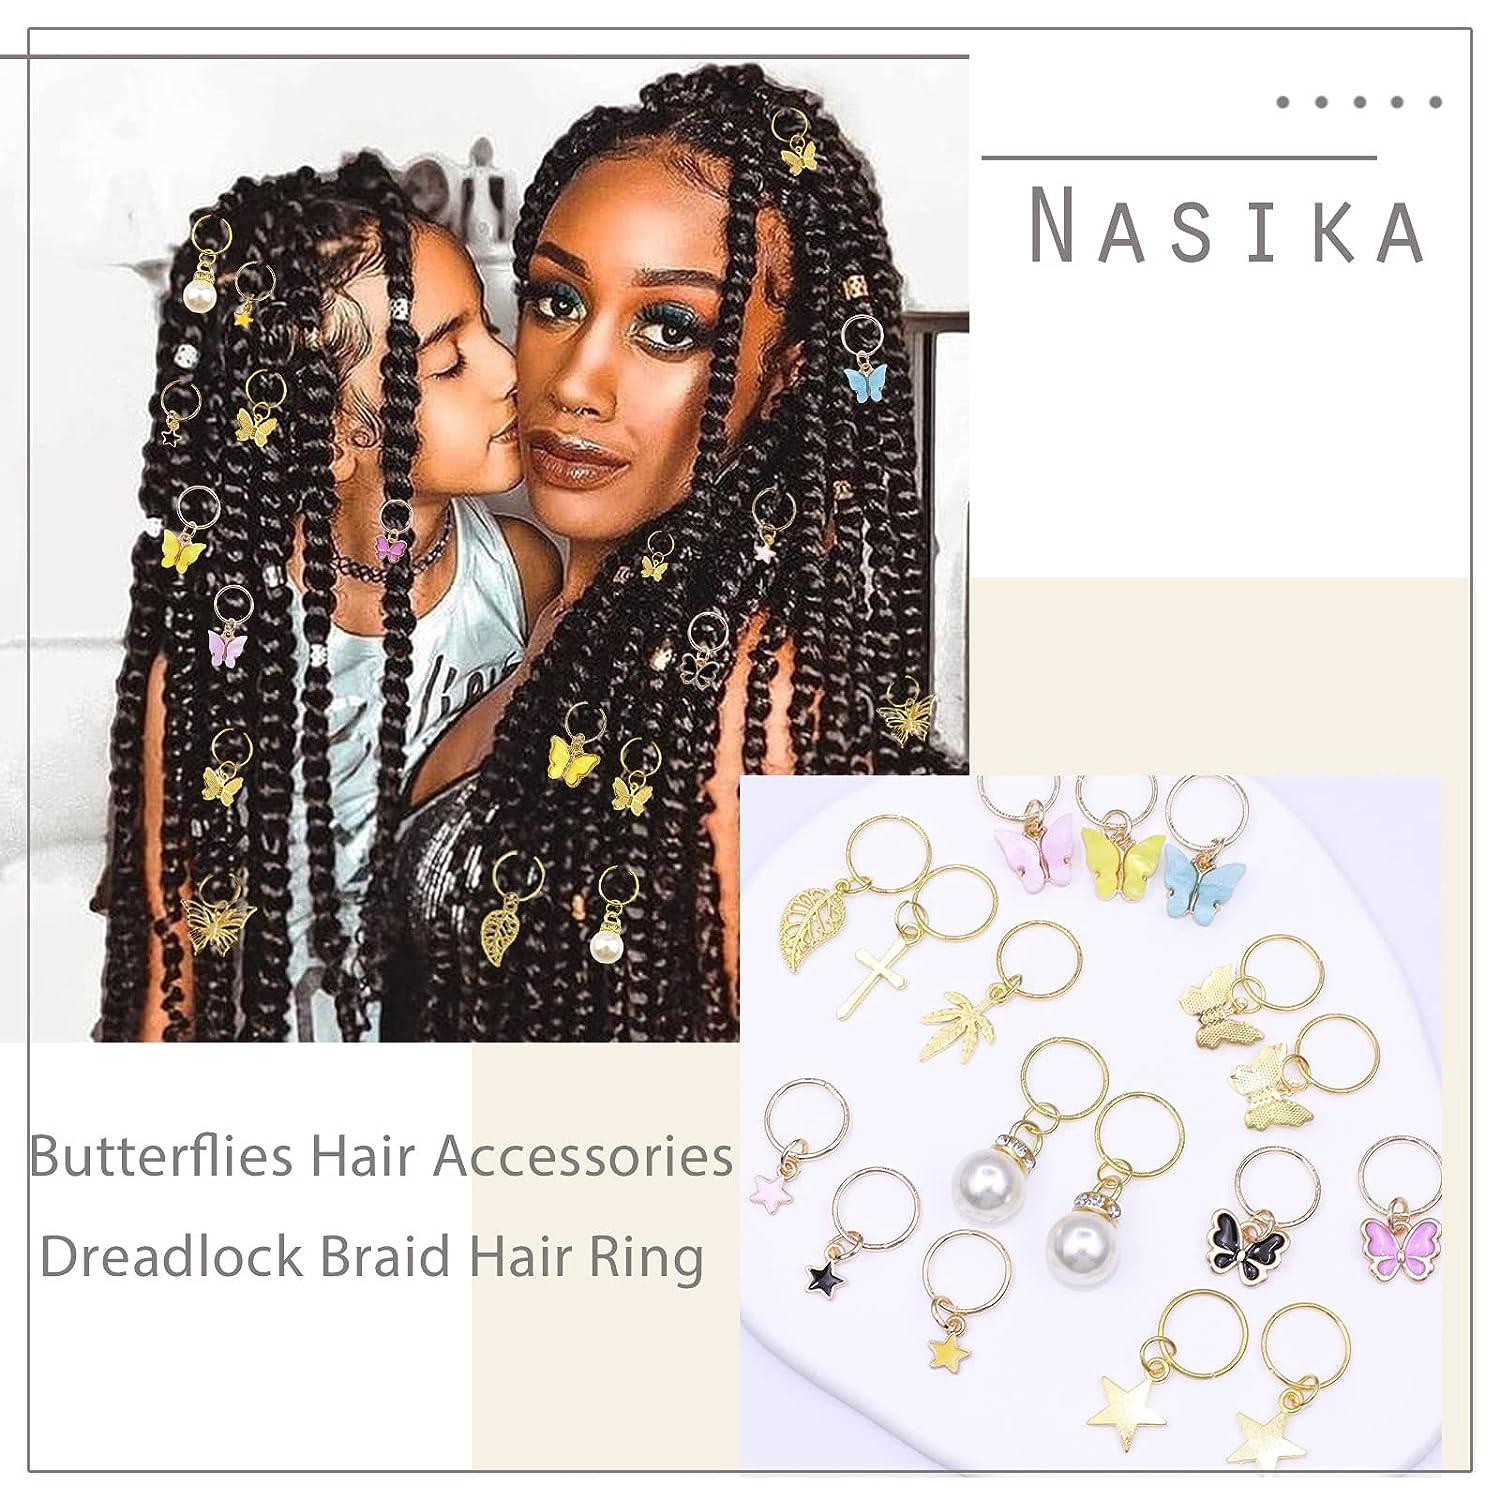 20pcs Butterfly Hair Clips Dreadlock Accessories Hair Jewelry For Women  Braid,hair Cuffs Charms Rings Braid Clips Golden Butterfly Hair Accessories  (s